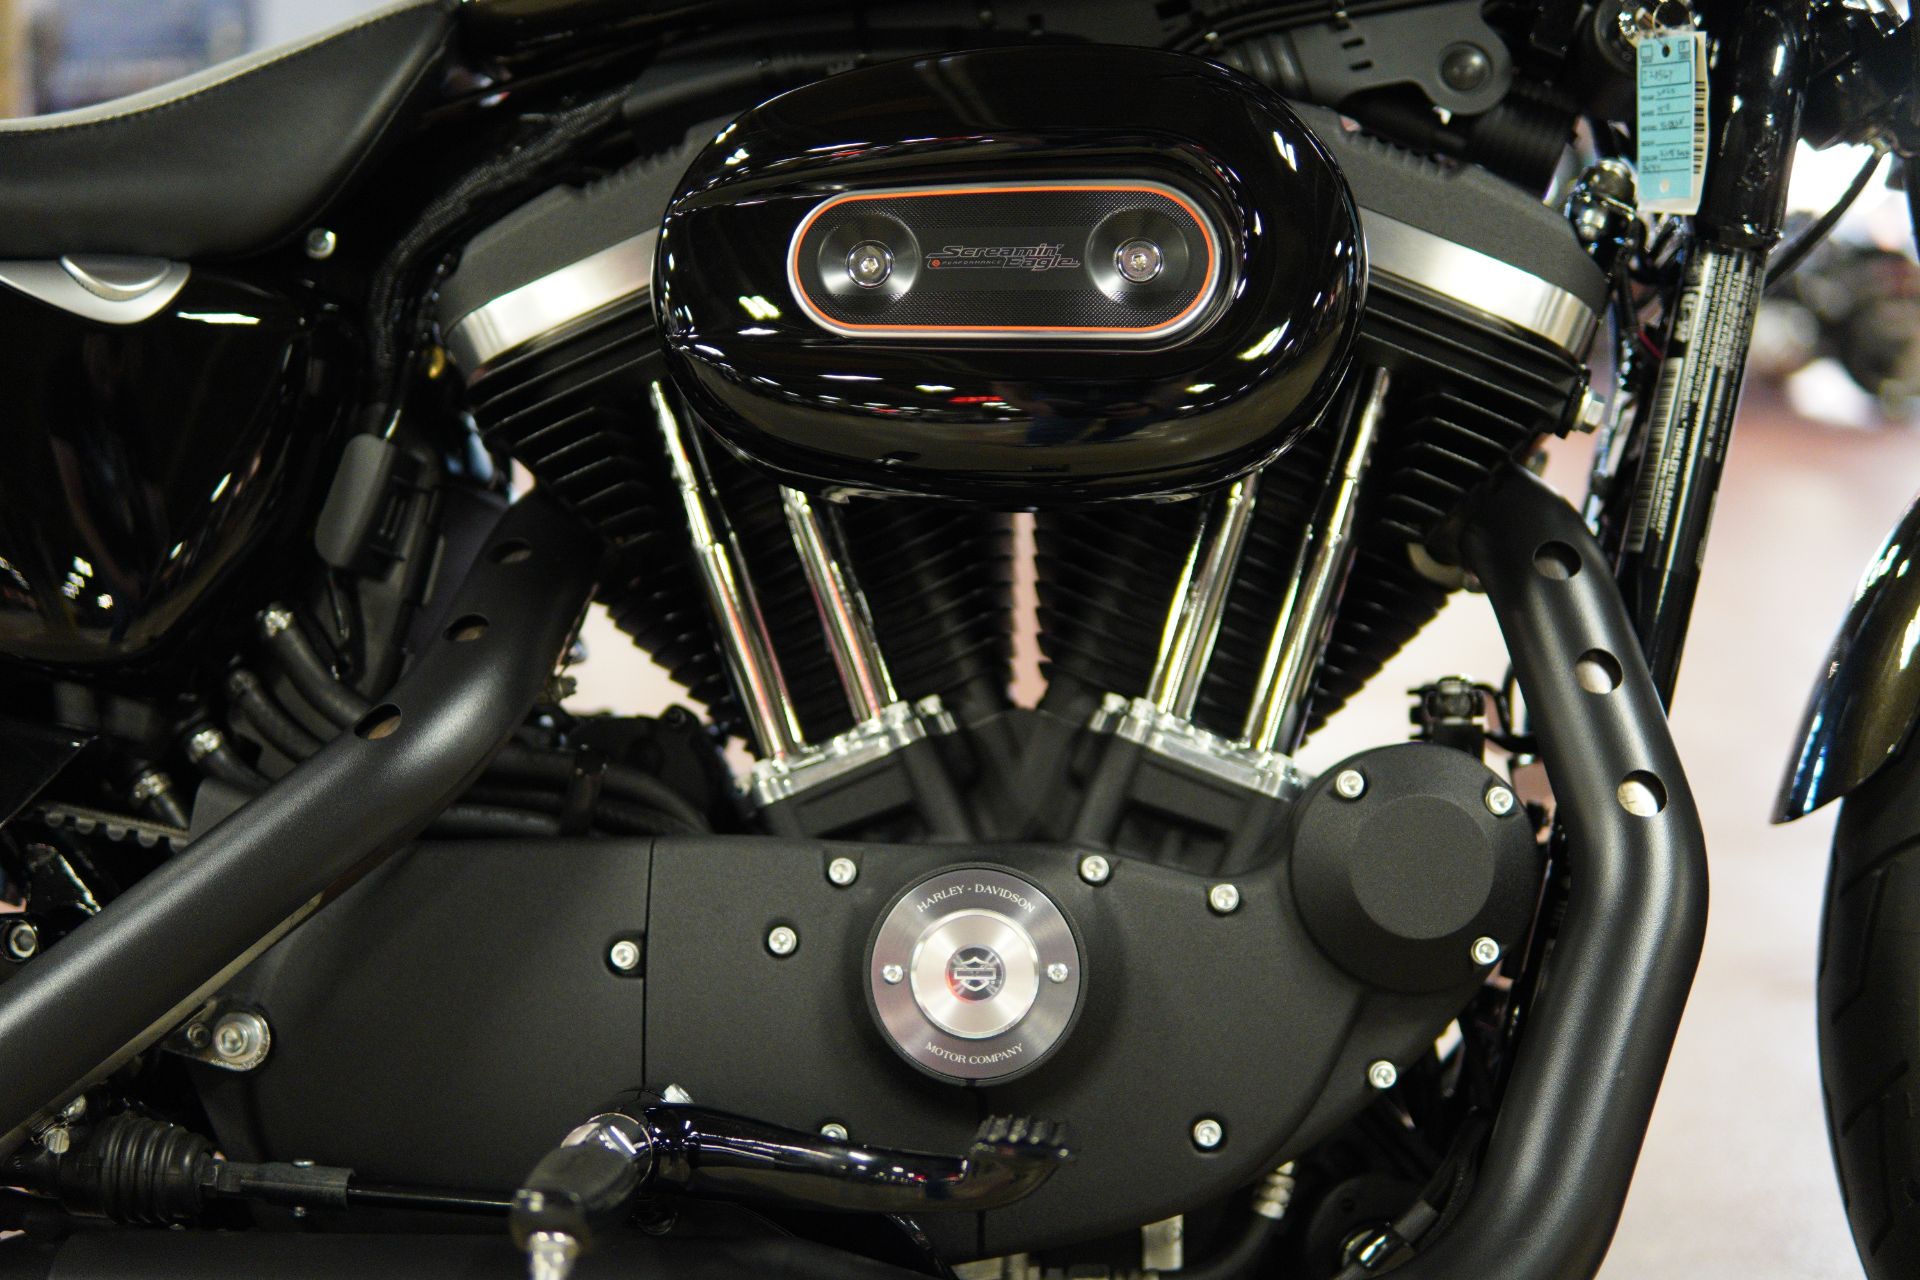 2020 Harley-Davidson Iron 883™ in New London, Connecticut - Photo 16